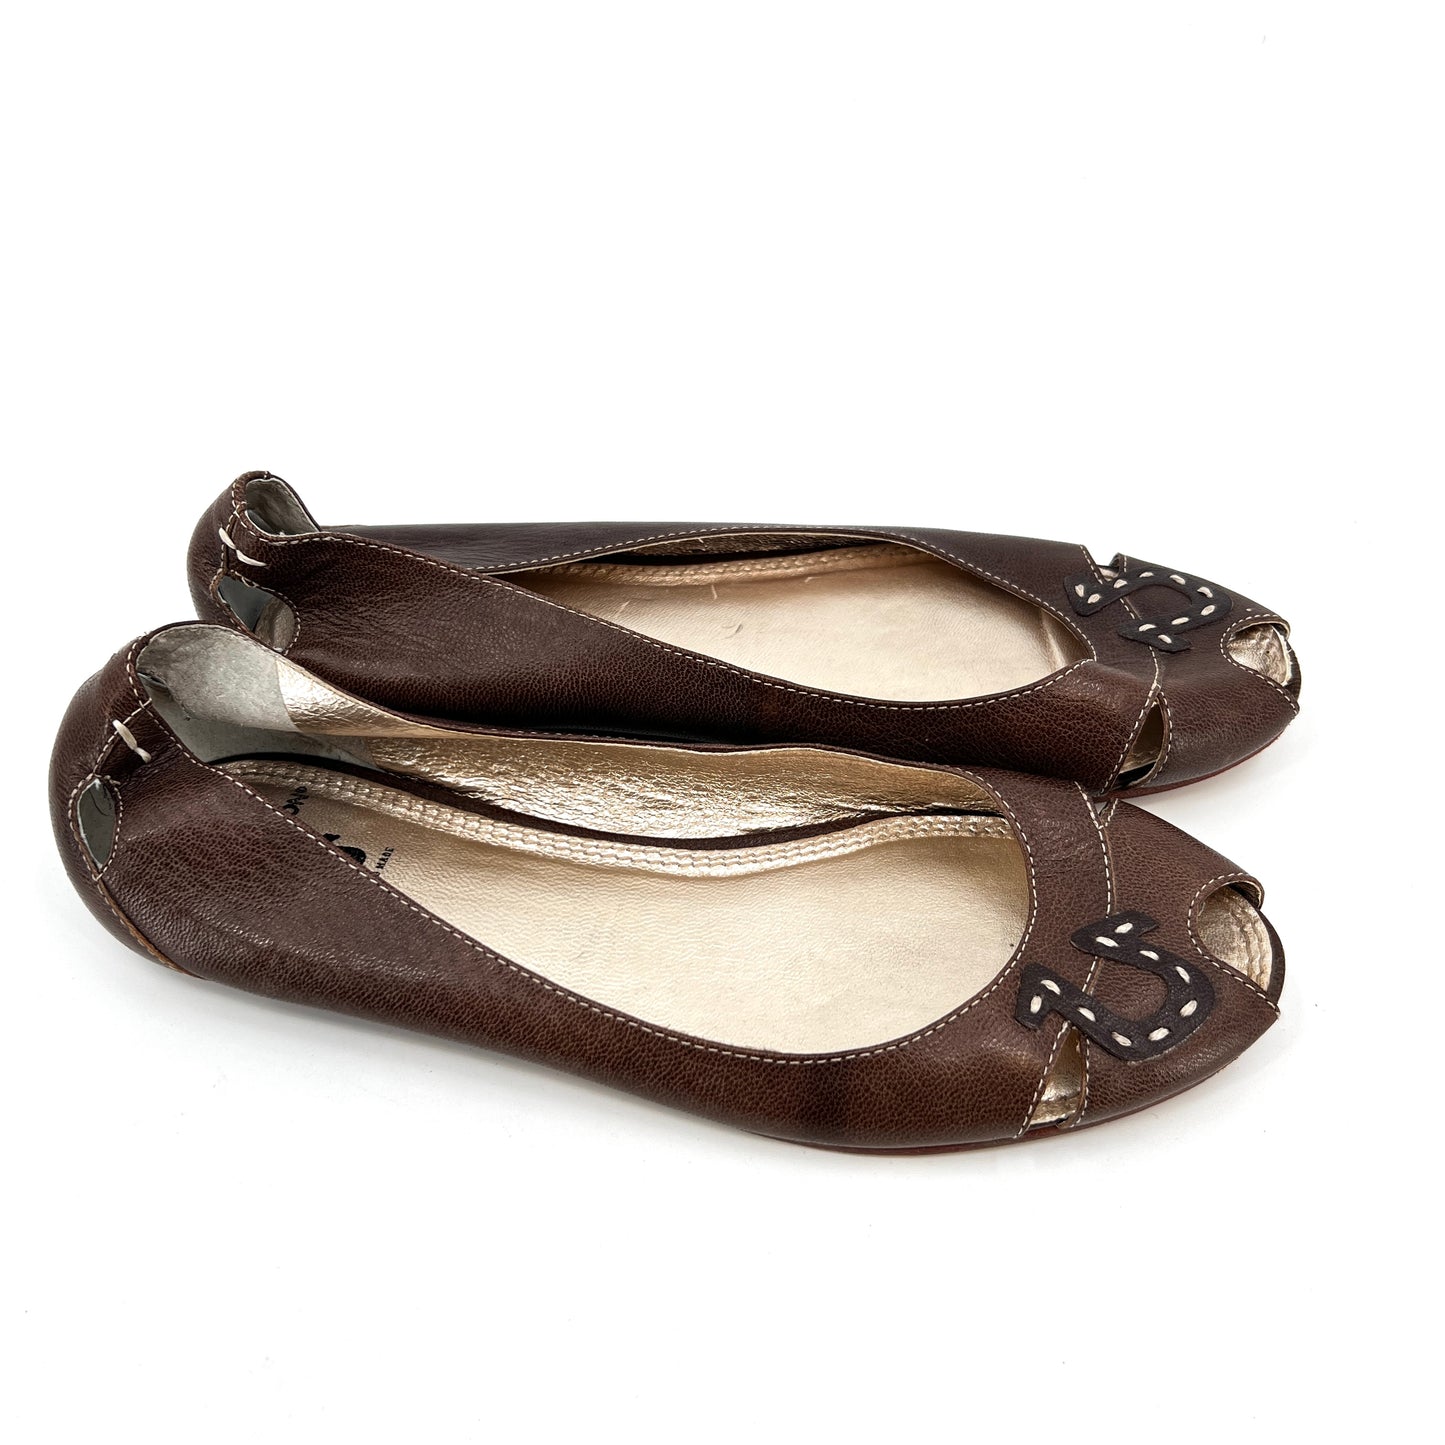 Y2K True Religion Leather Flats Peep-toe Sandals  7.5US